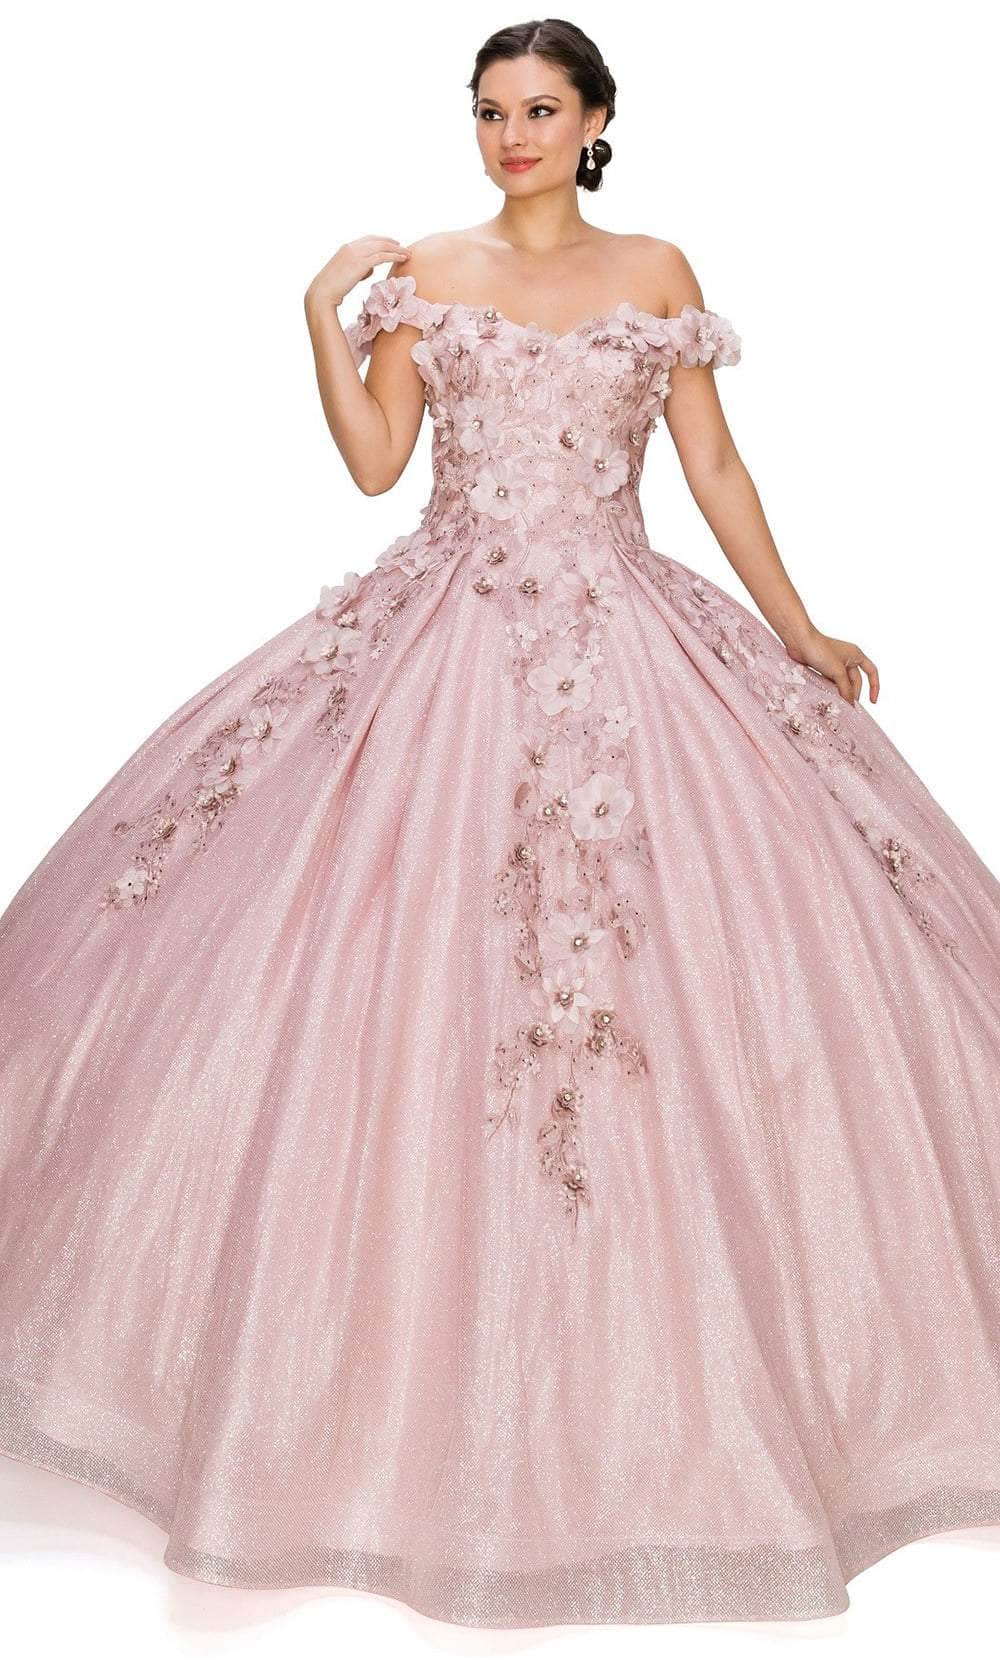 Cinderella Couture 8020J - 3D Floral Appliqued Ballgown Special Occasion Dress